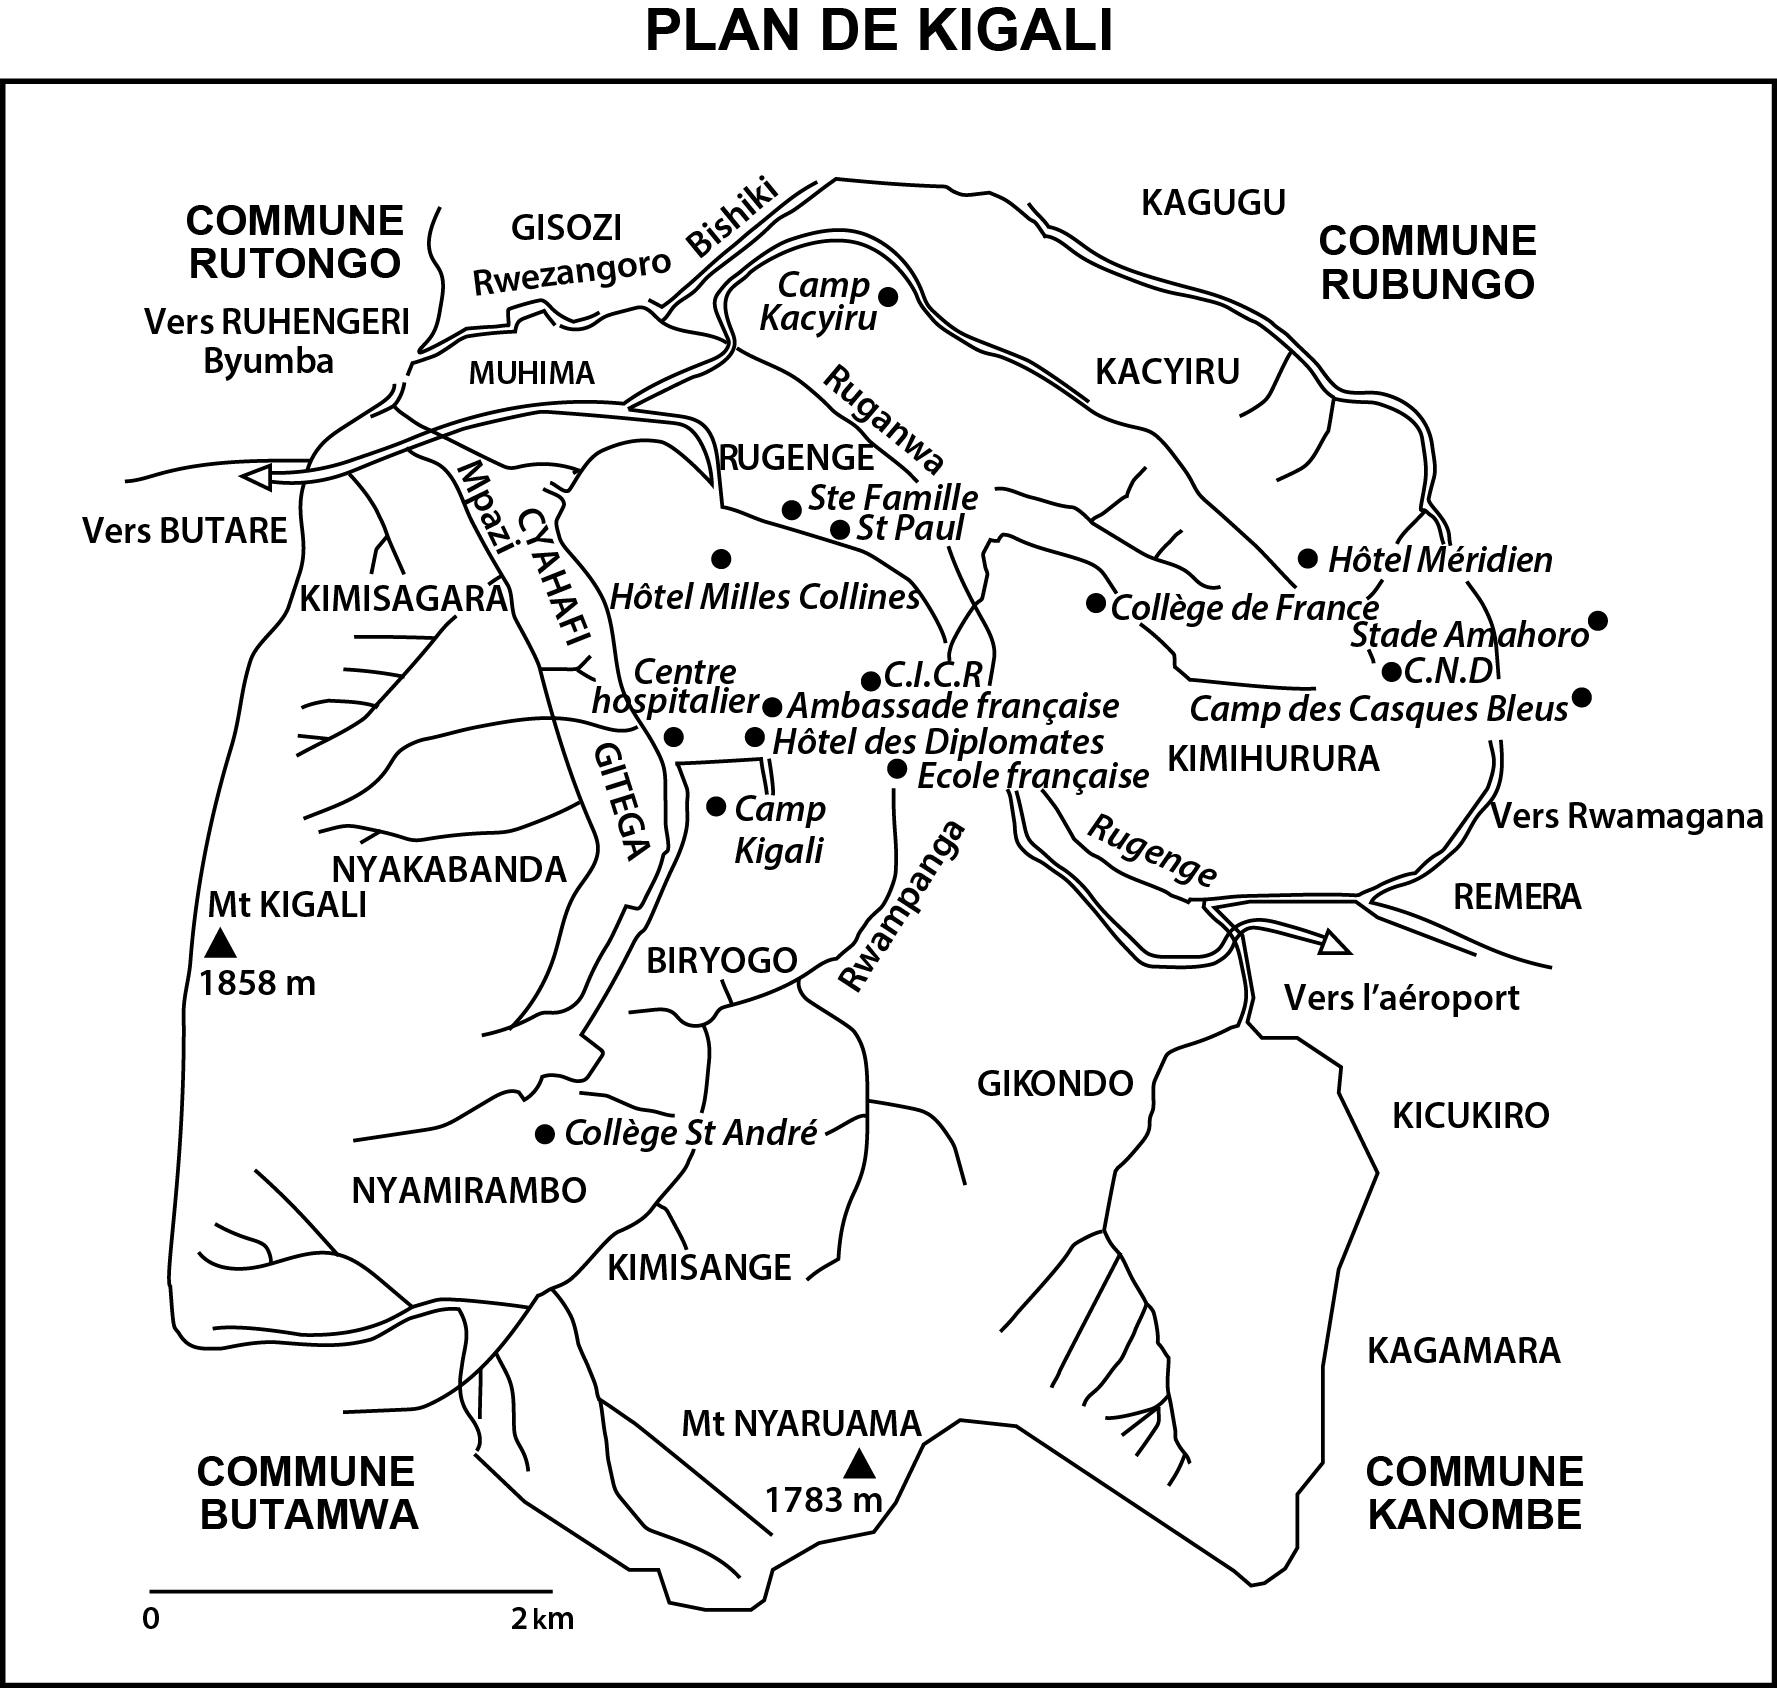 Map of Kigali 1994